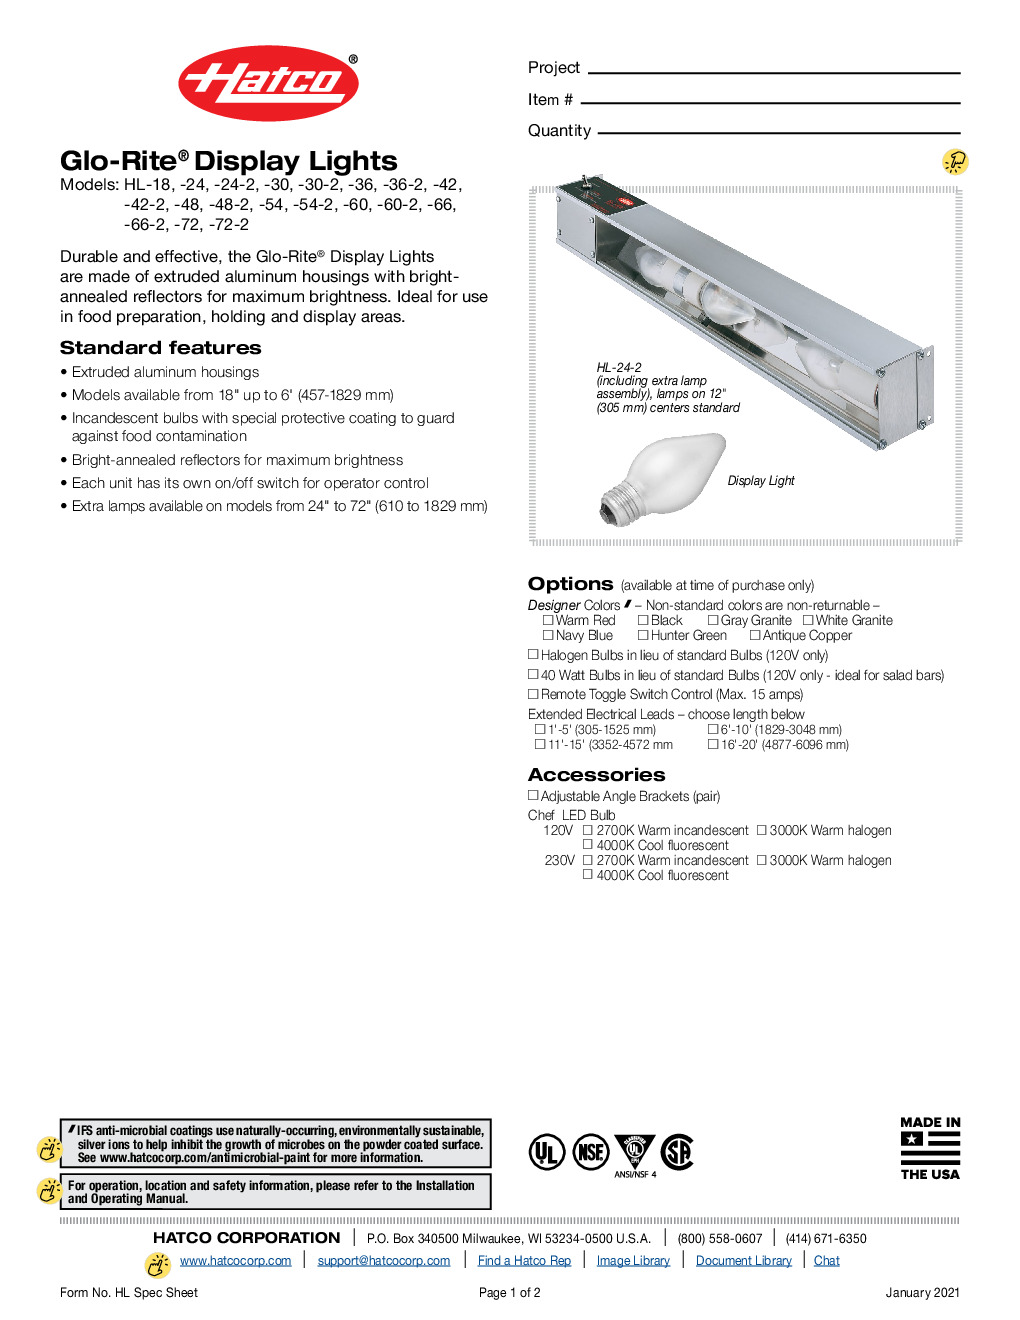 Hatco HL-48-120-QS for Display Light Fixture